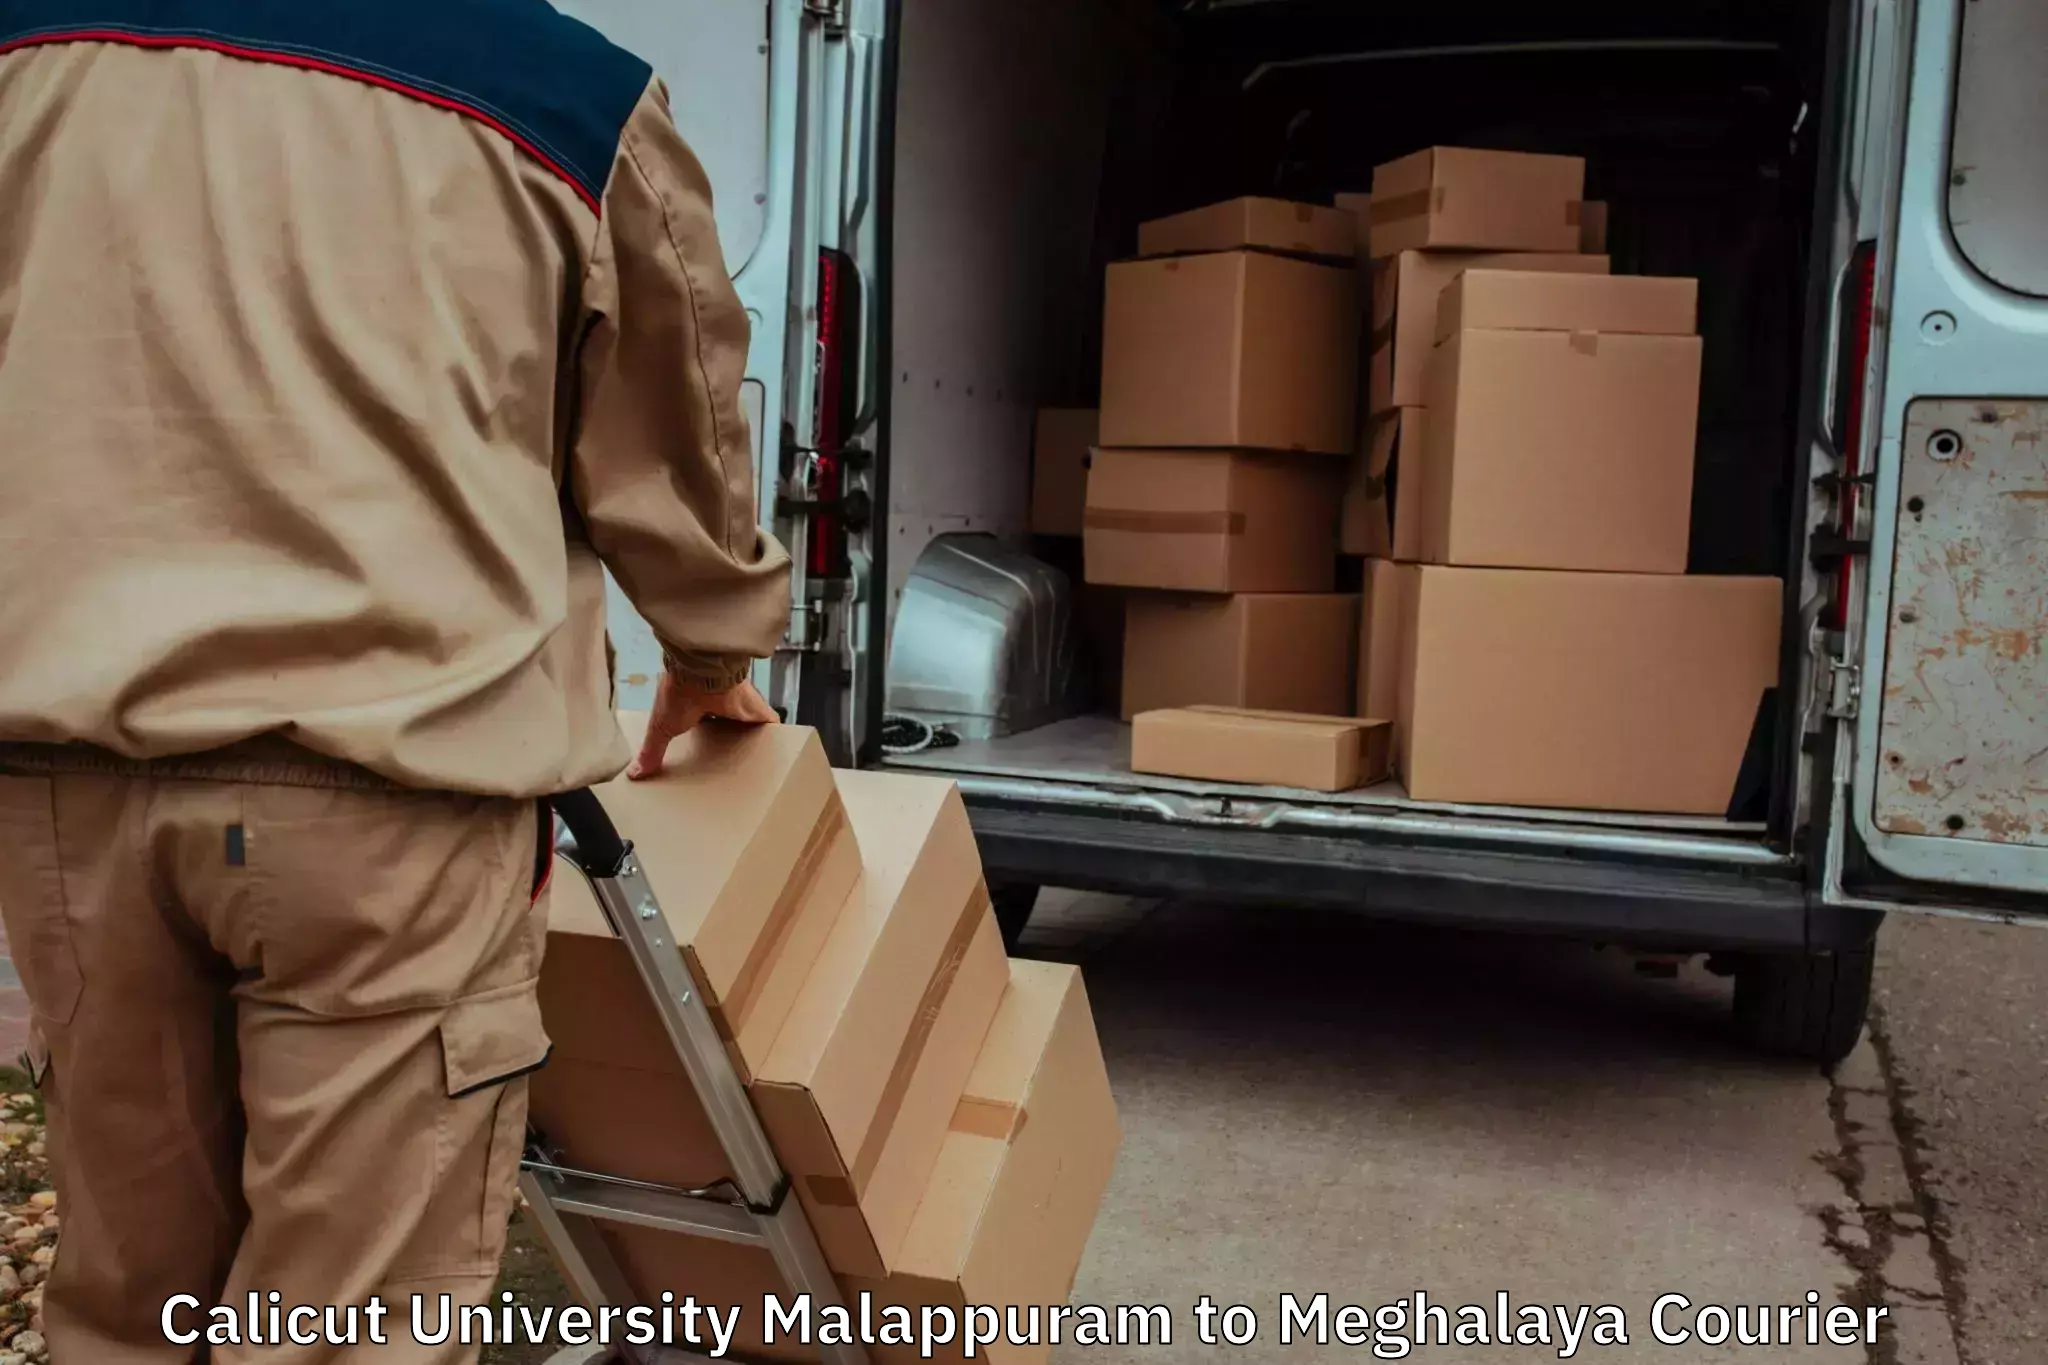 Furniture moving assistance Calicut University Malappuram to Umsaw